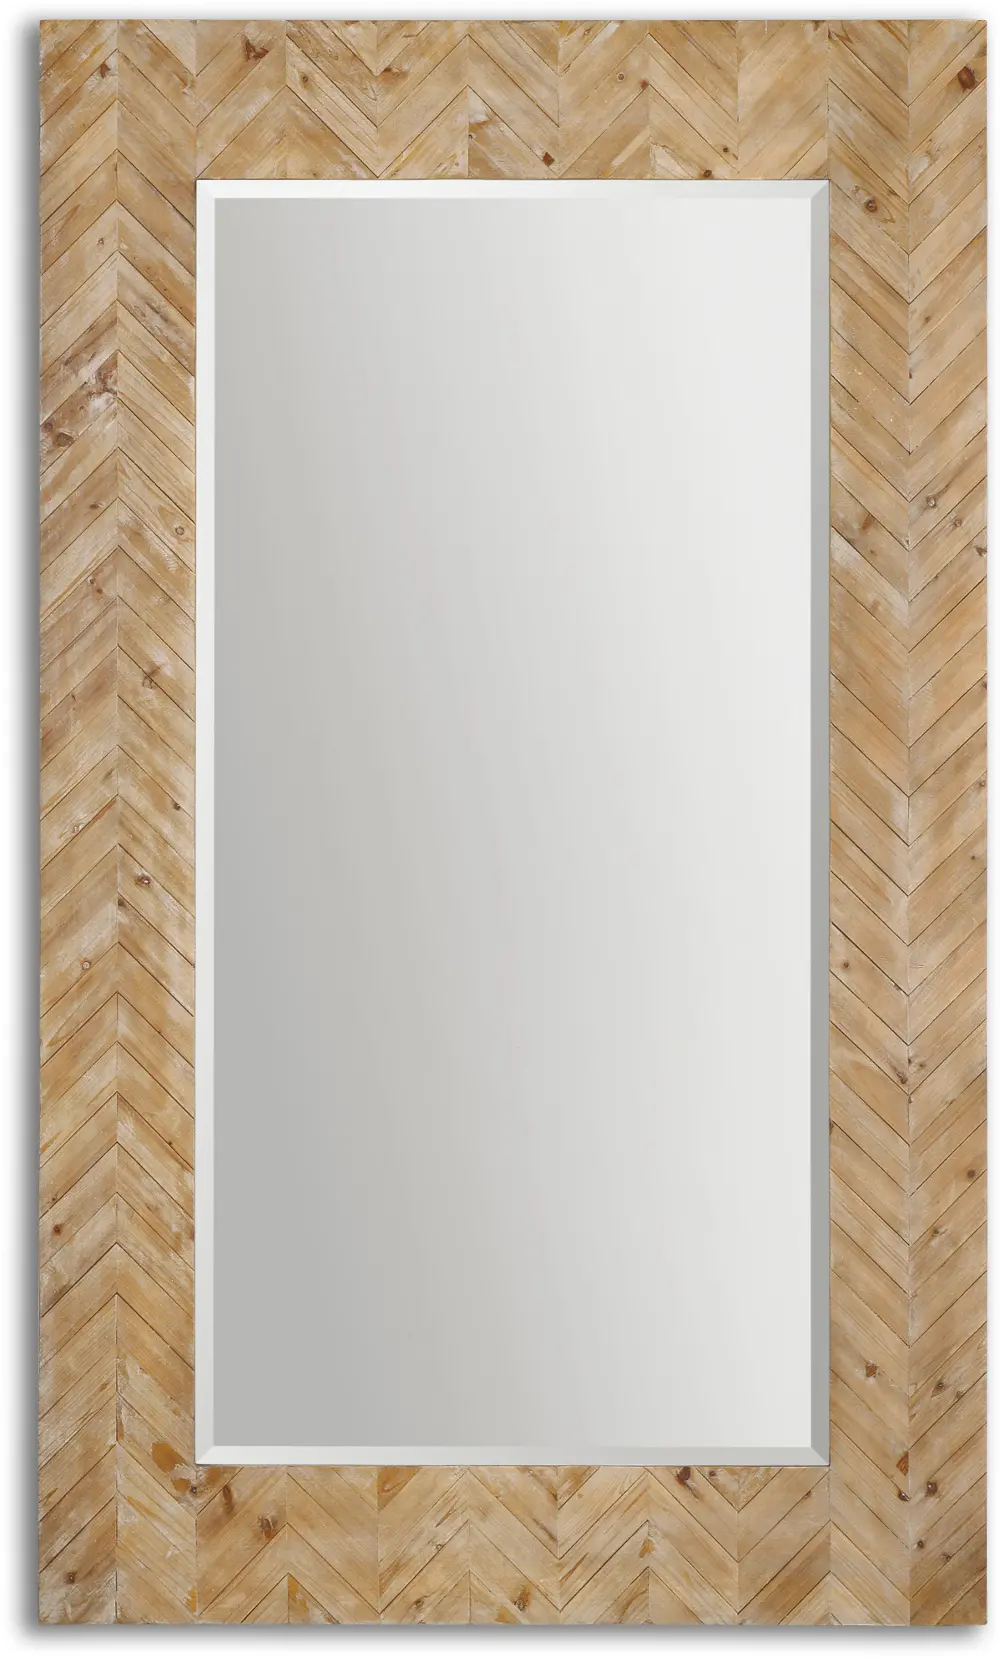 Chevron Patterned Wood Framed Mirror-1